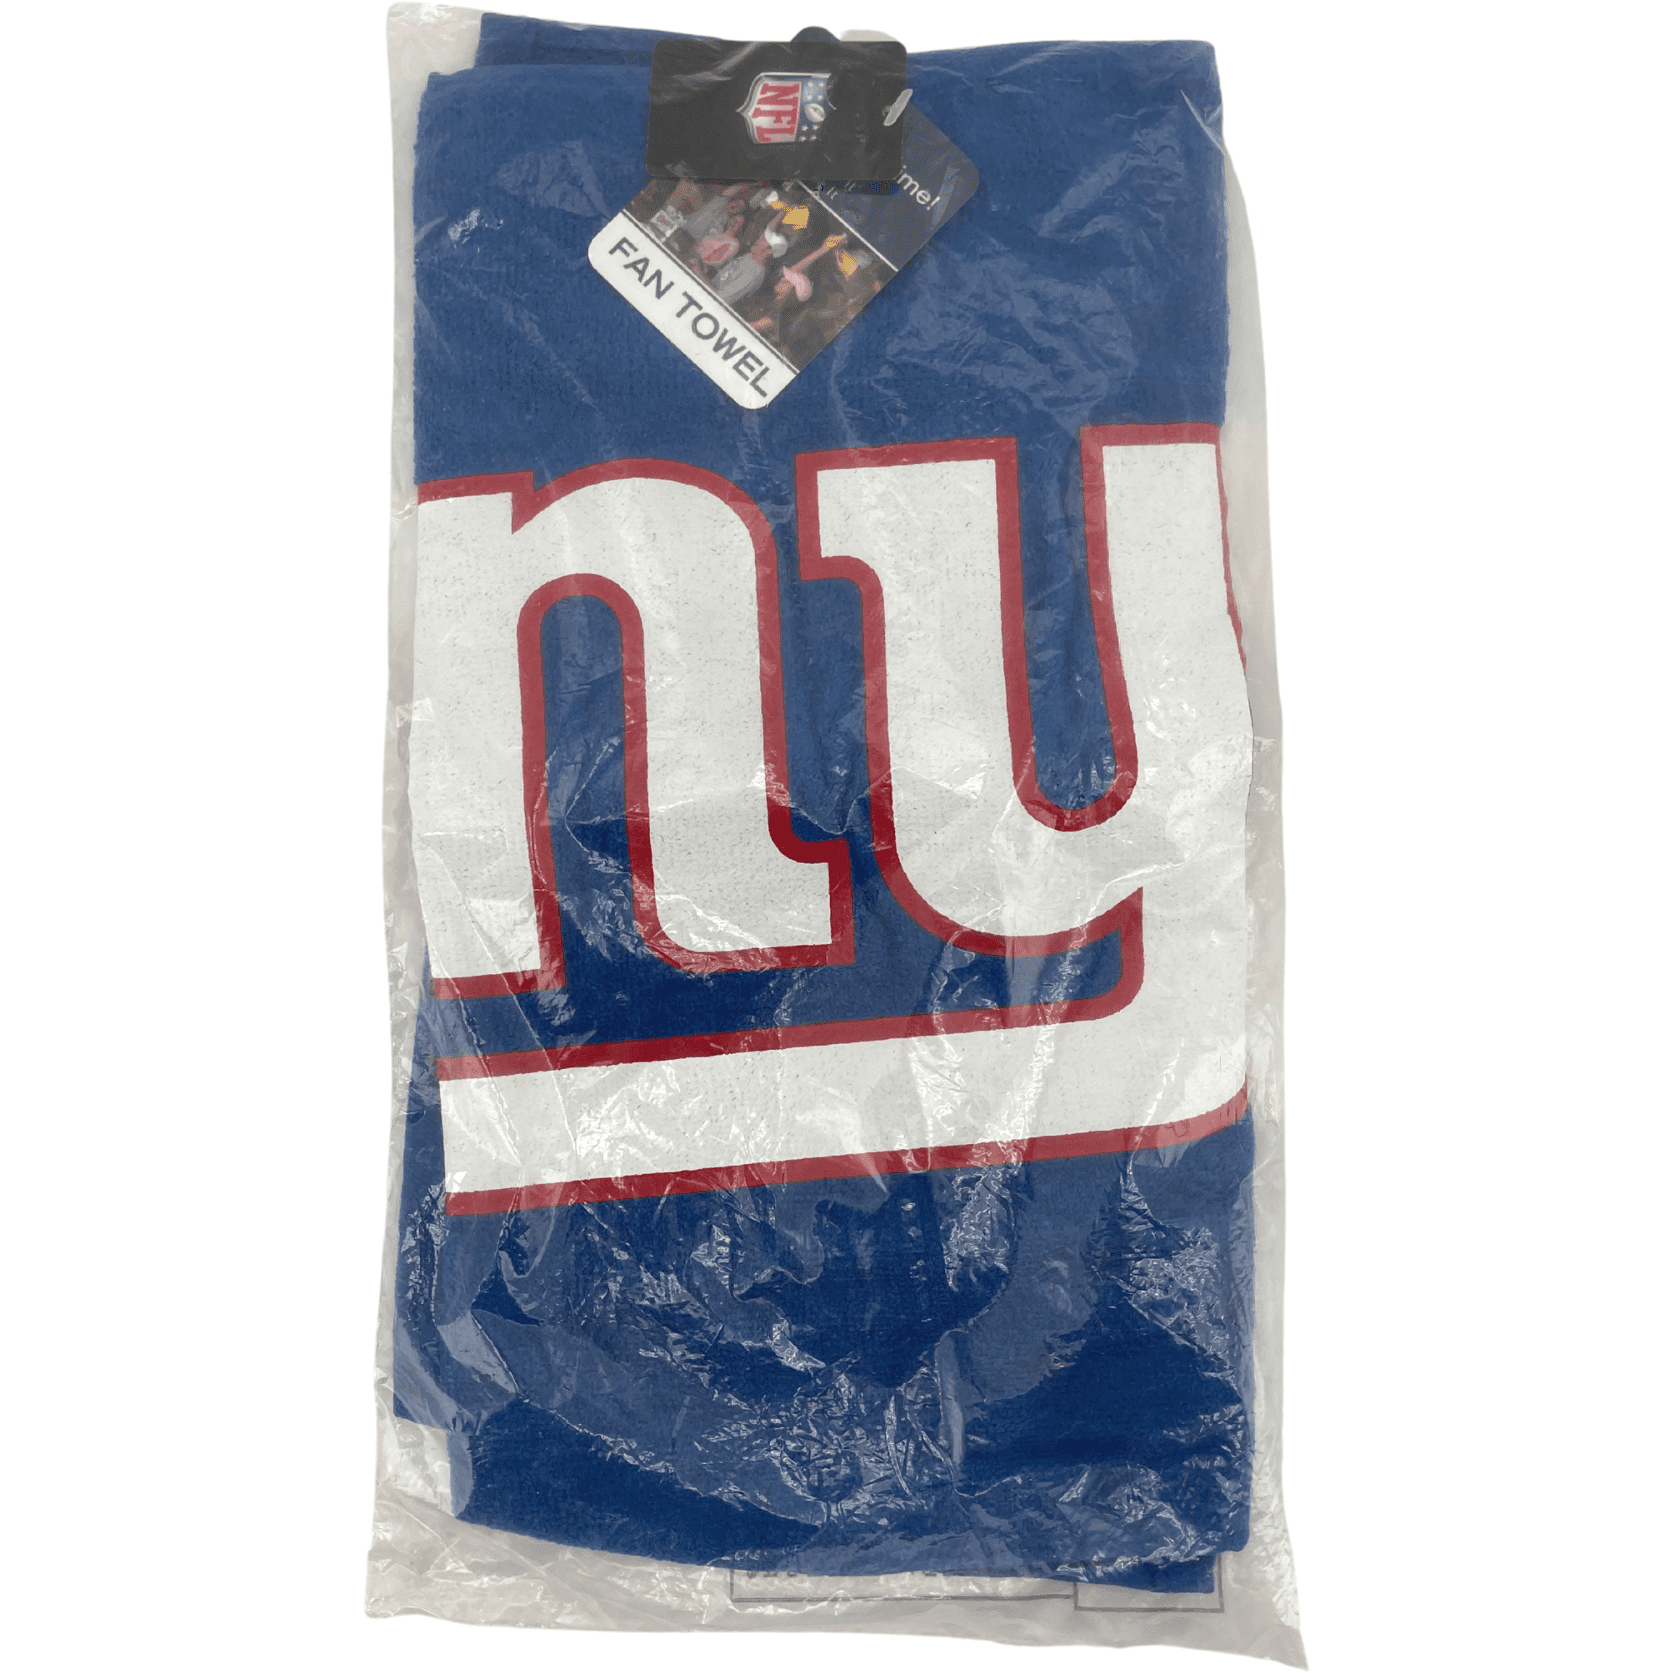 McArthur NFL Sports Towel / New York Giants / Blue, White & Red / Fan Towel